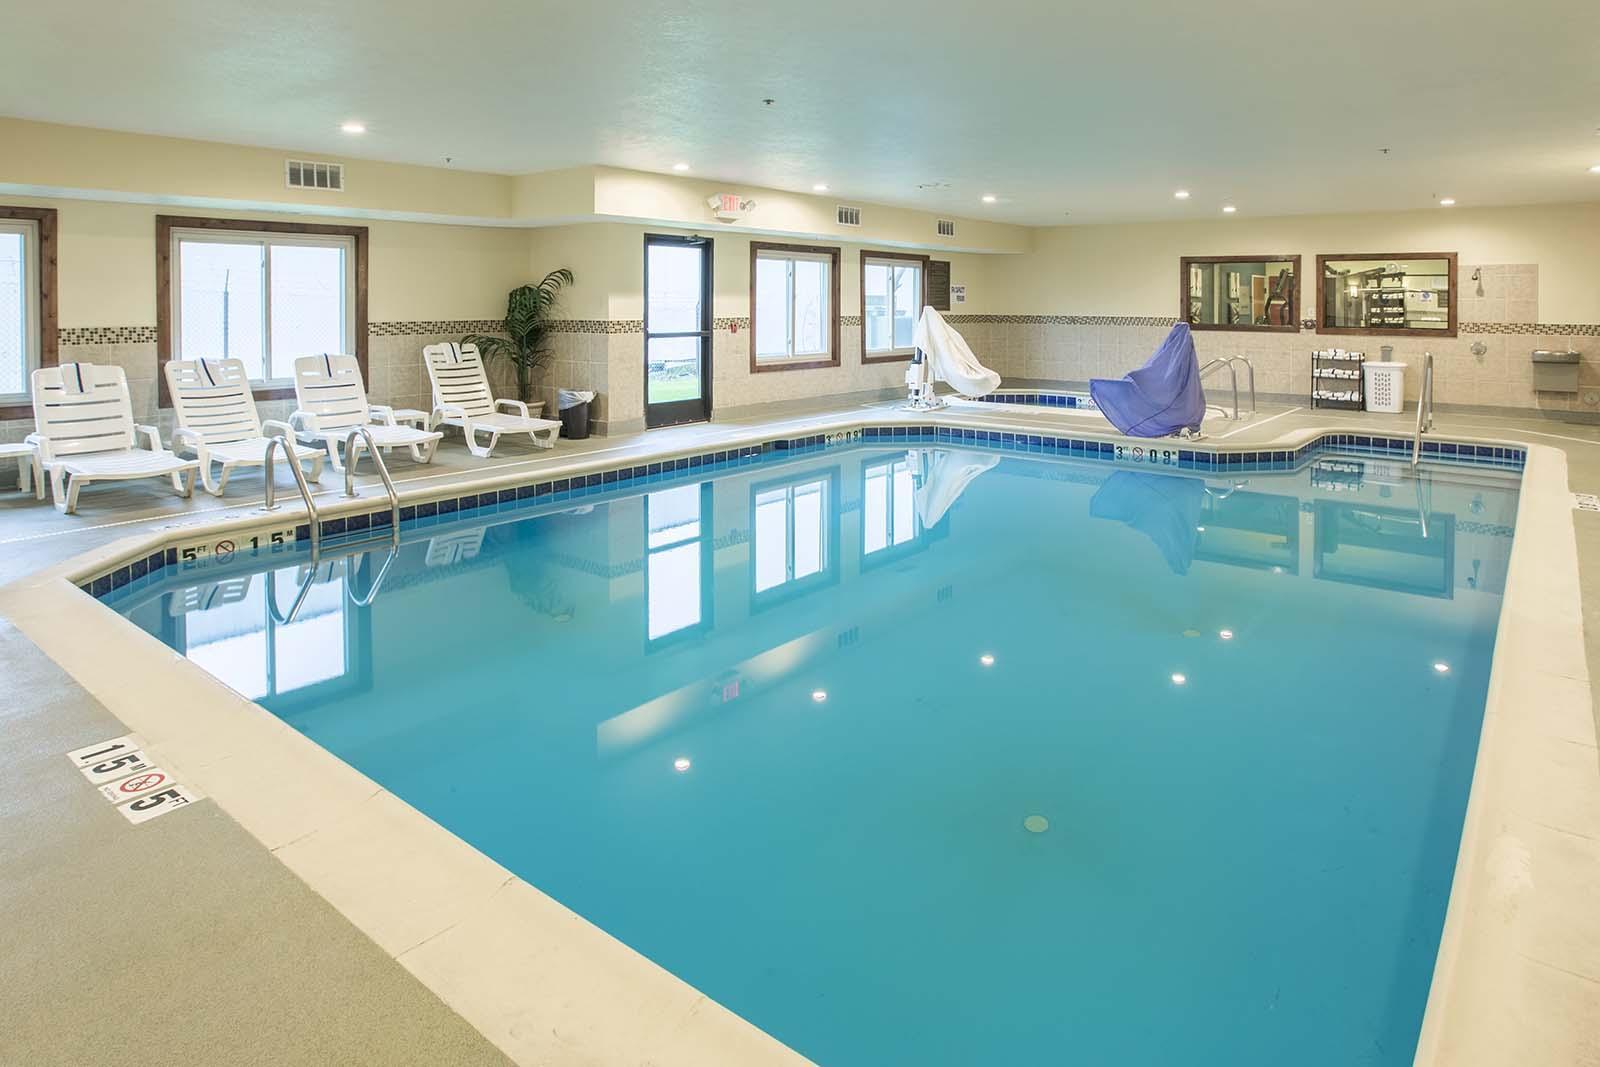 Pool at Comfort Suites in Benton Harbor